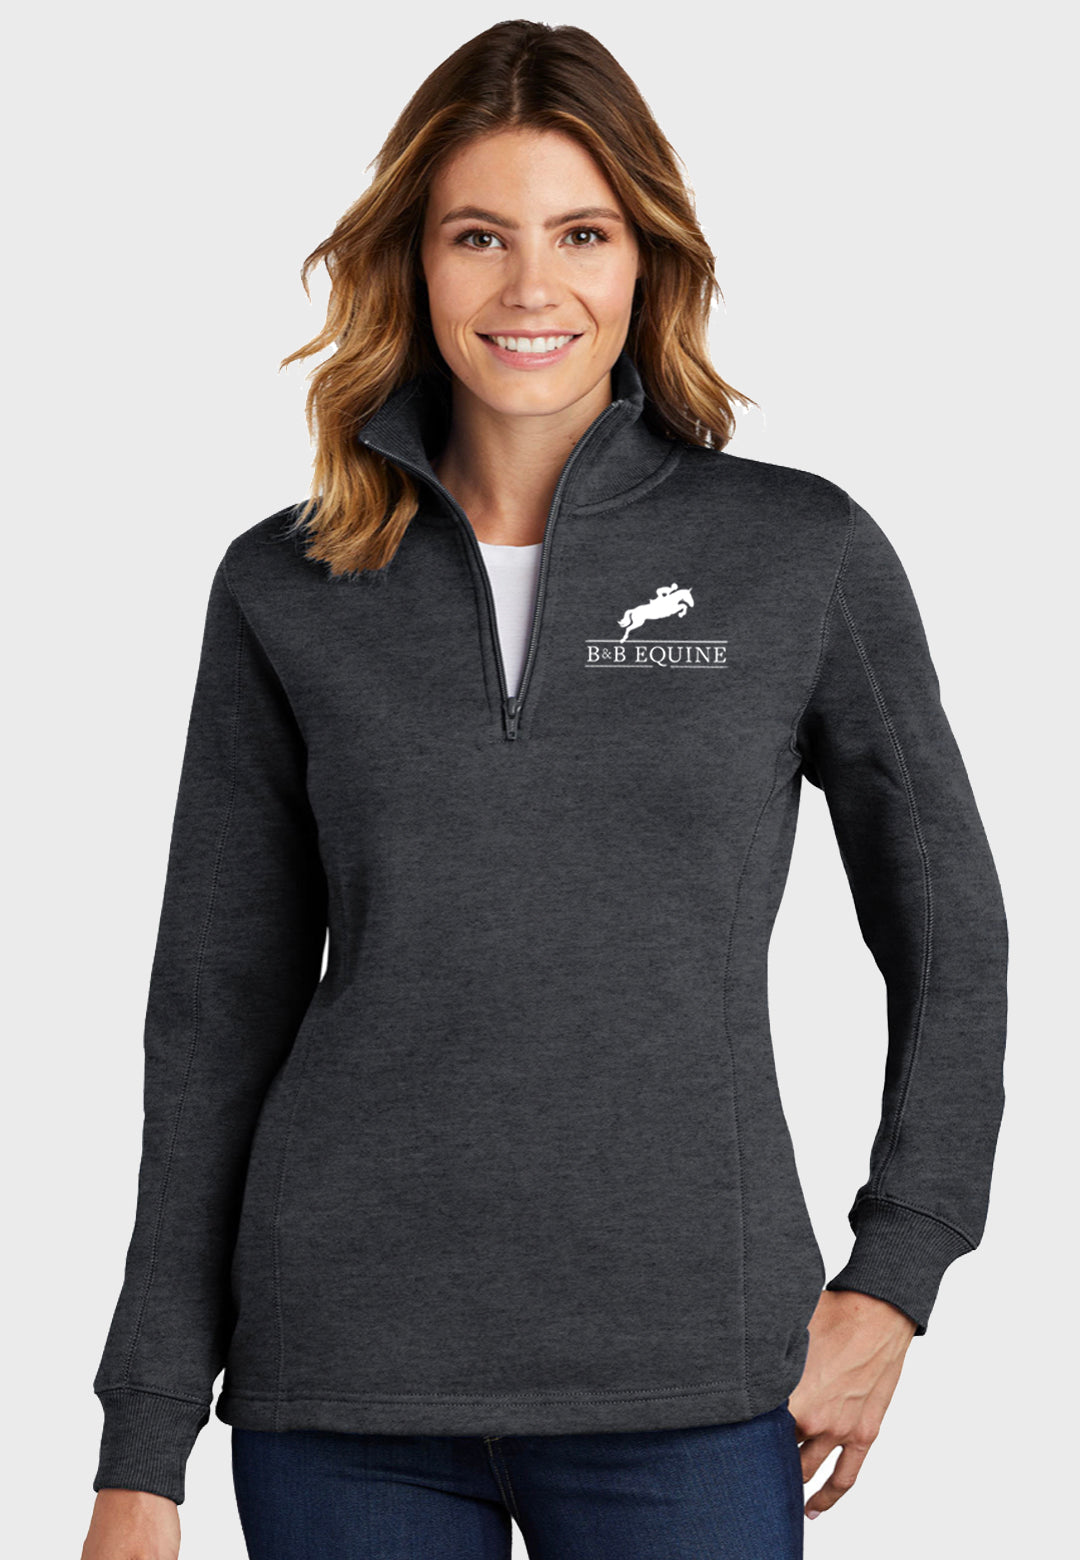 B & B Equine Sport-Tek® 1/4-Zip Sweatshirt - Ladies/Mens Sizes, 2 Color Options